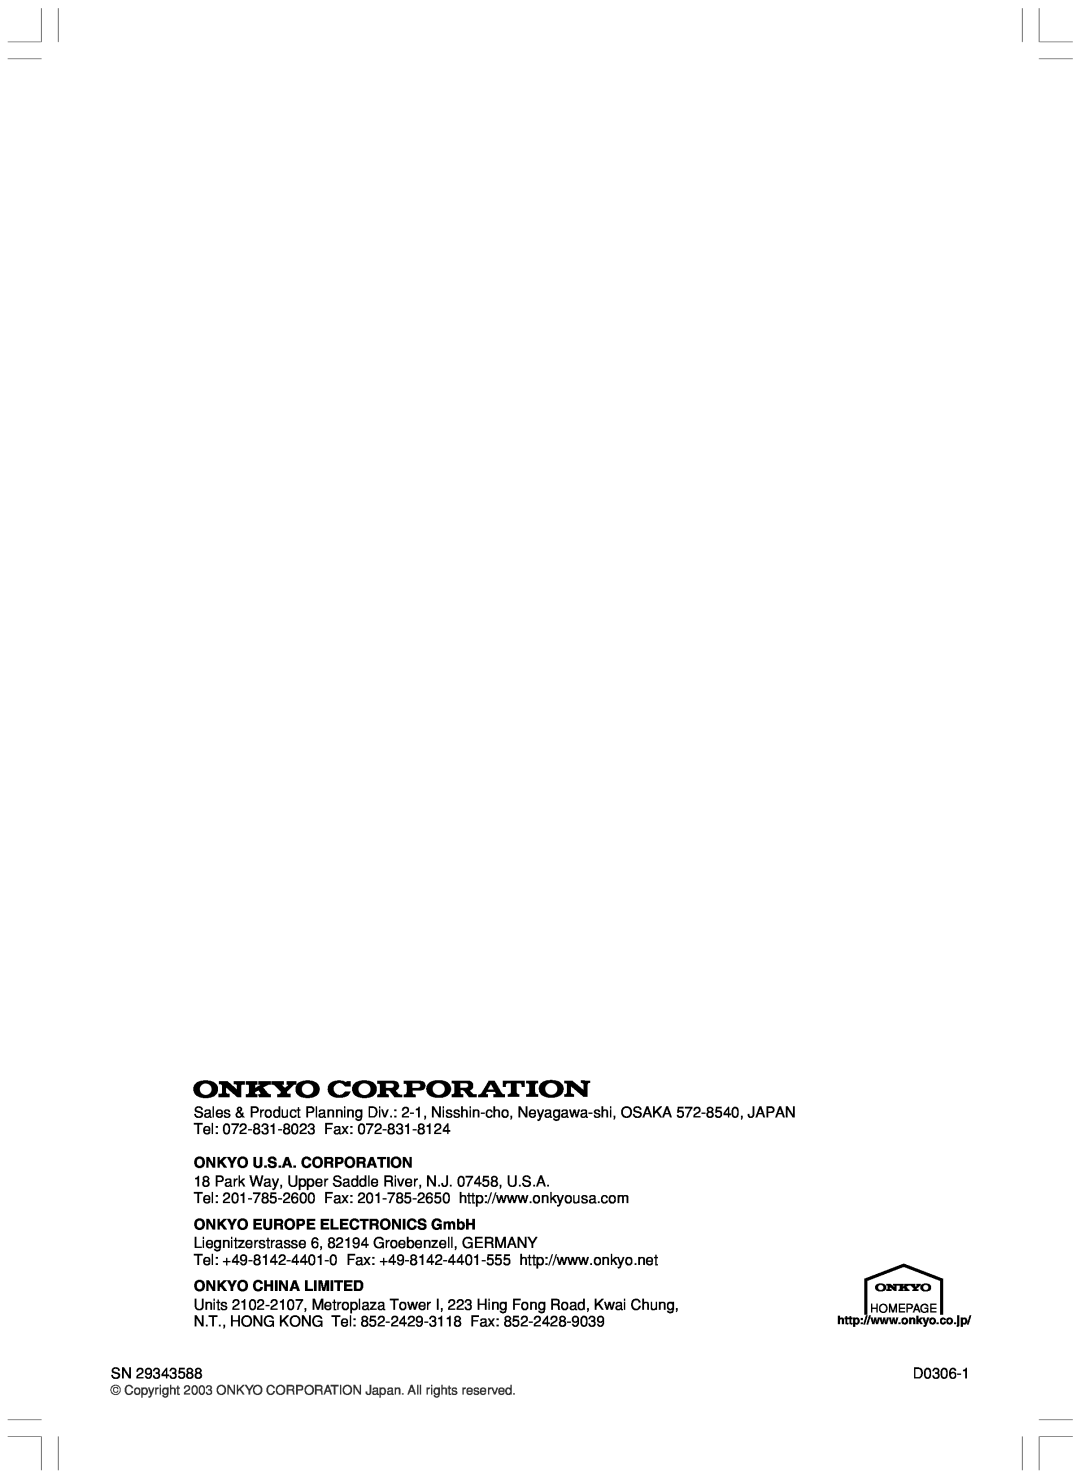 Onkyo HTP-103E instruction manual Onkyo U.S.A. Corporation, ONKYO EUROPE ELECTRONICS GmbH, Onkyo China Limited 